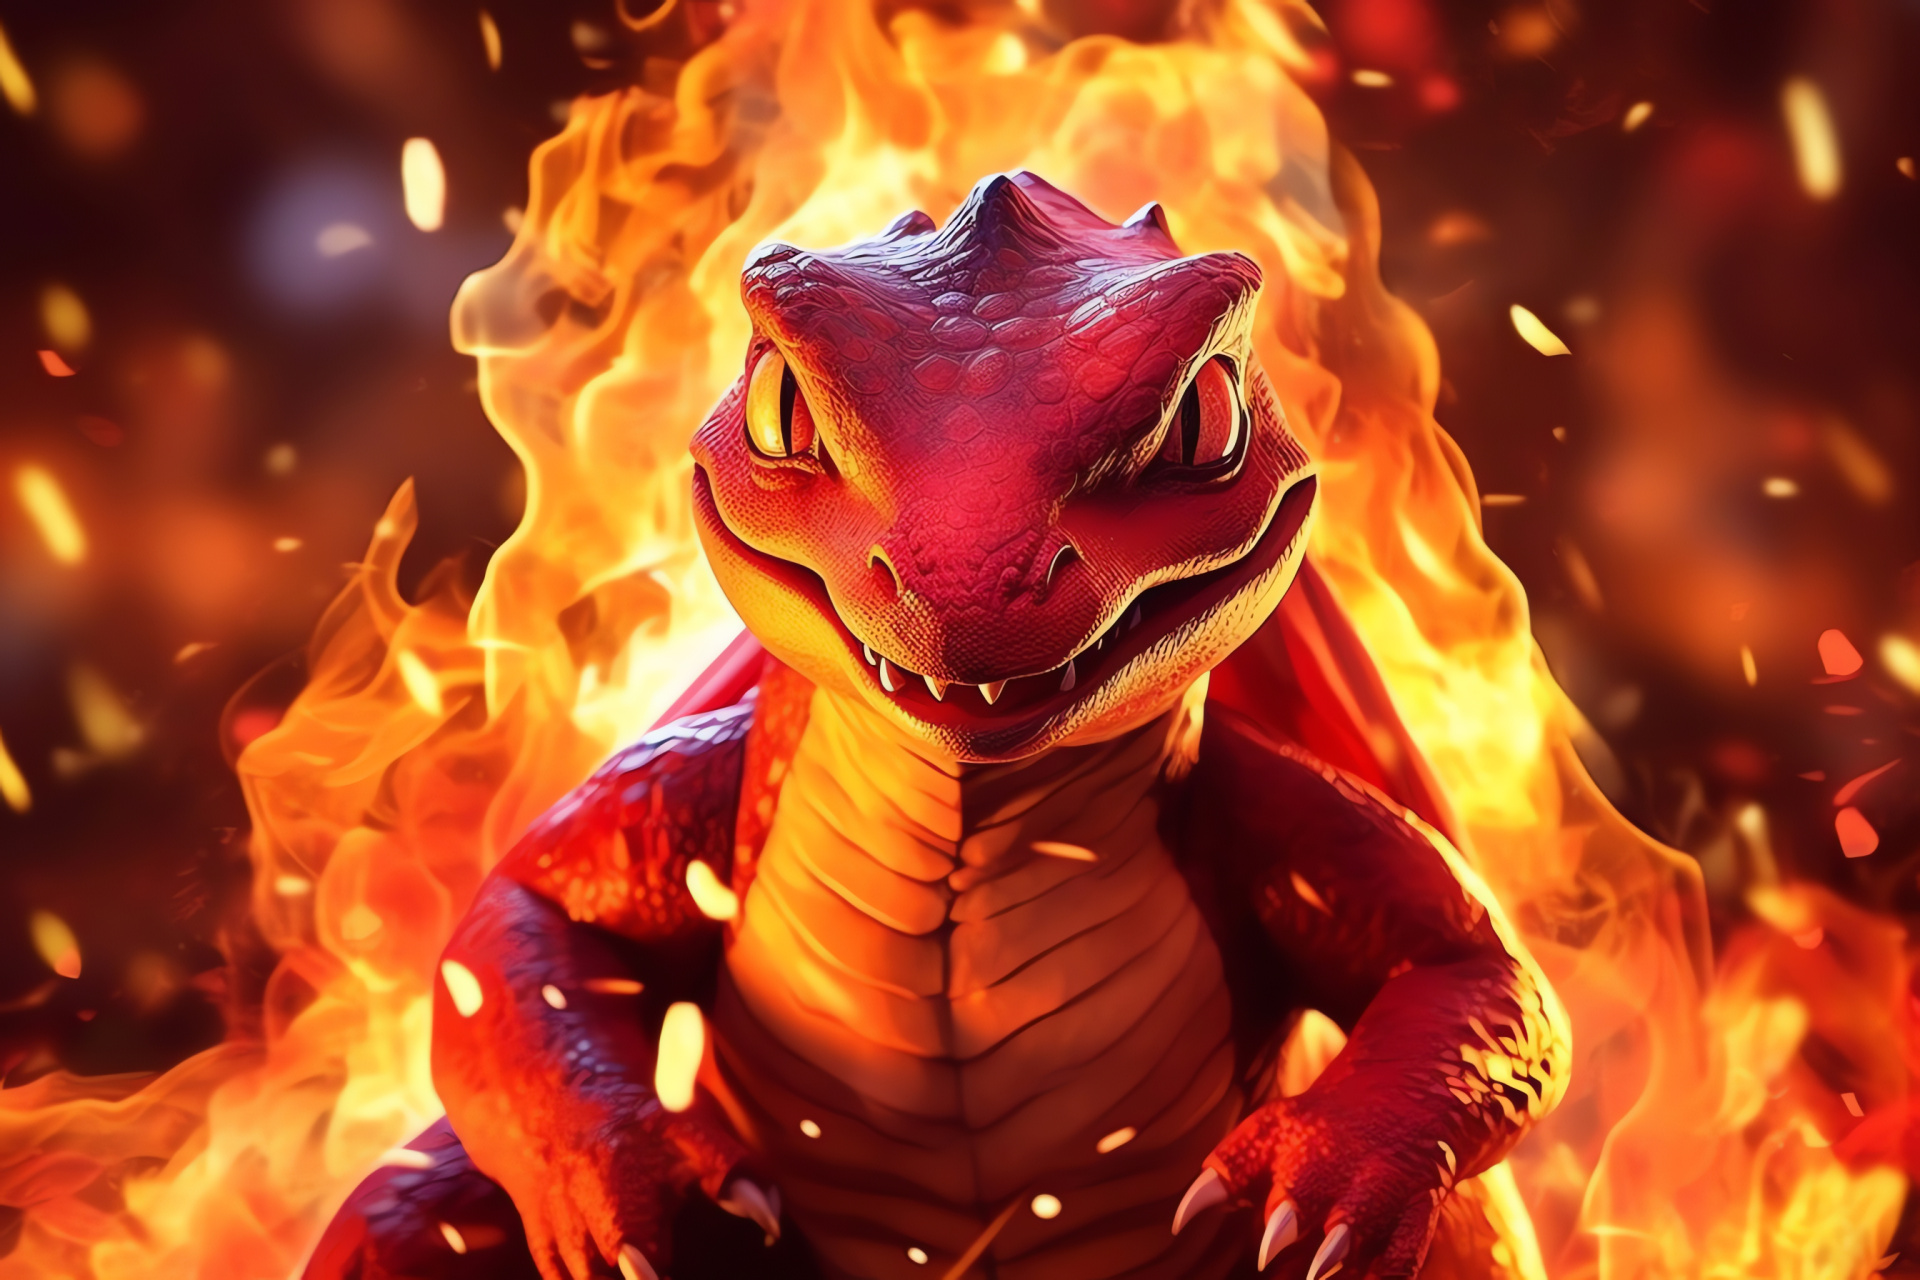 Charmeleon, Flame-tailed creature, Pokemon video game, Fiery dragon-like figure, simple duo-chrome setting, HD Desktop Image